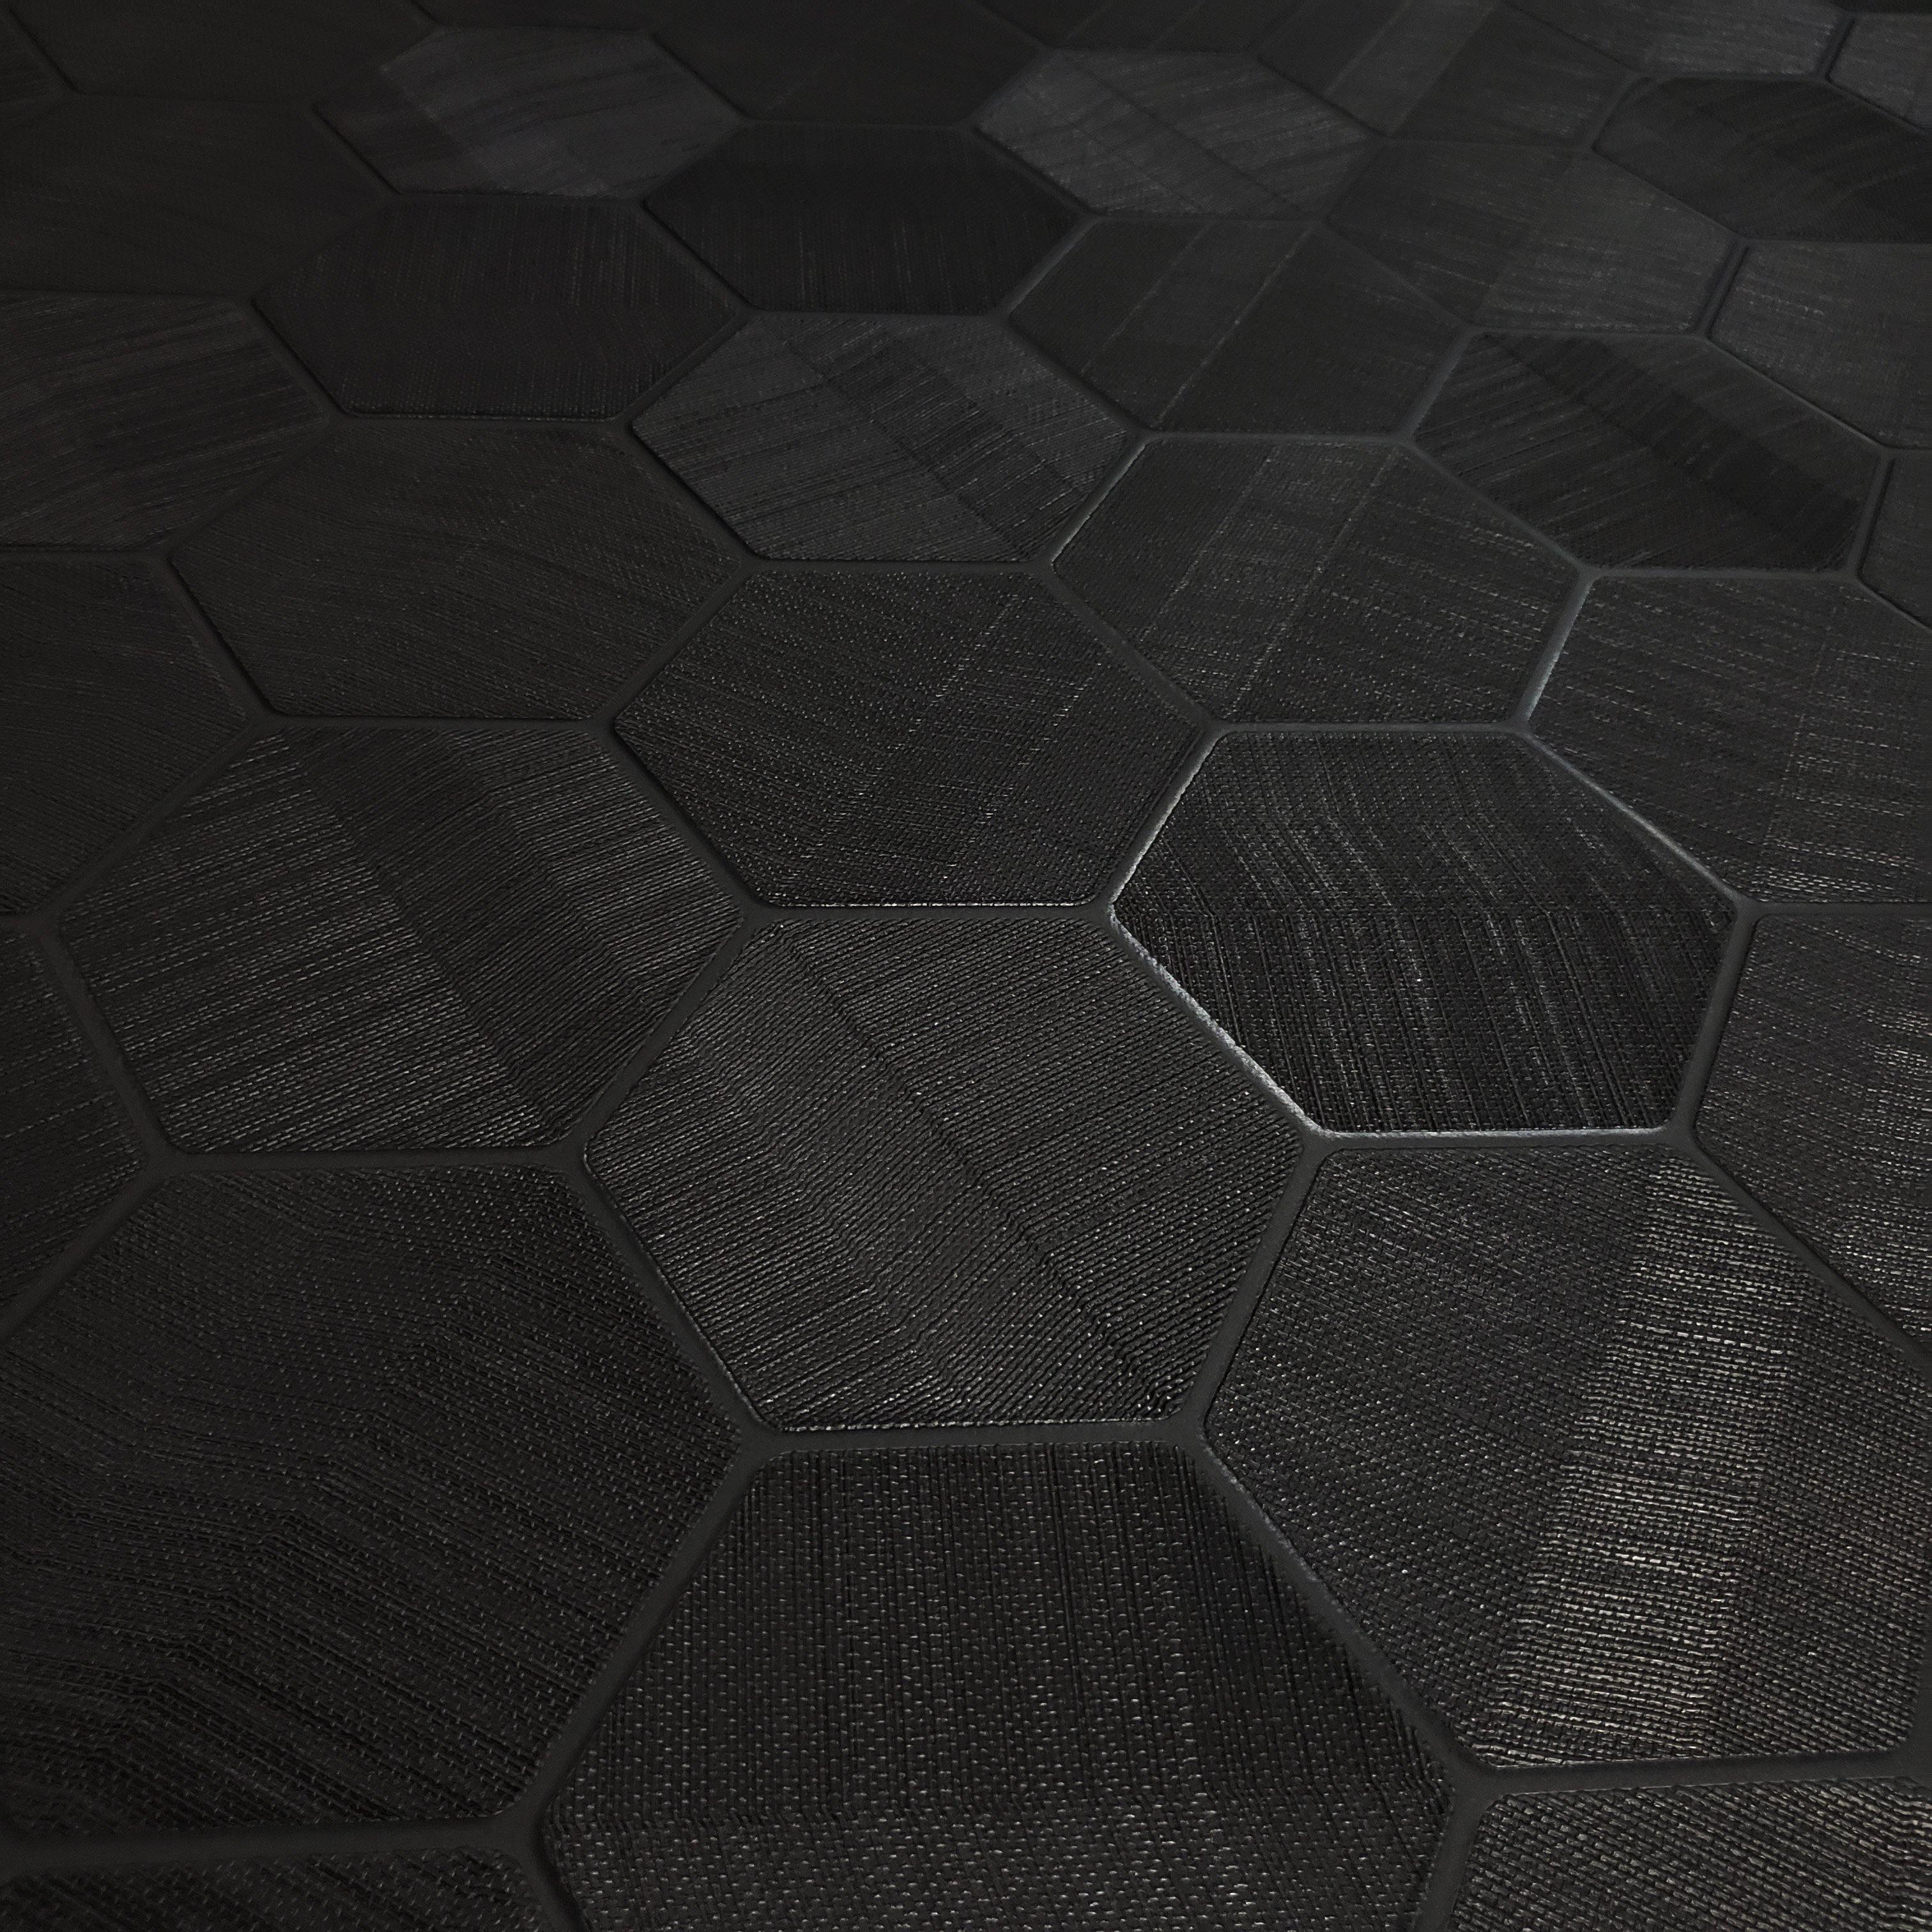 Z Lamborghini Hexagon Feature Black Textured Wallpaper 3d Geometr Wallcoveringsmart